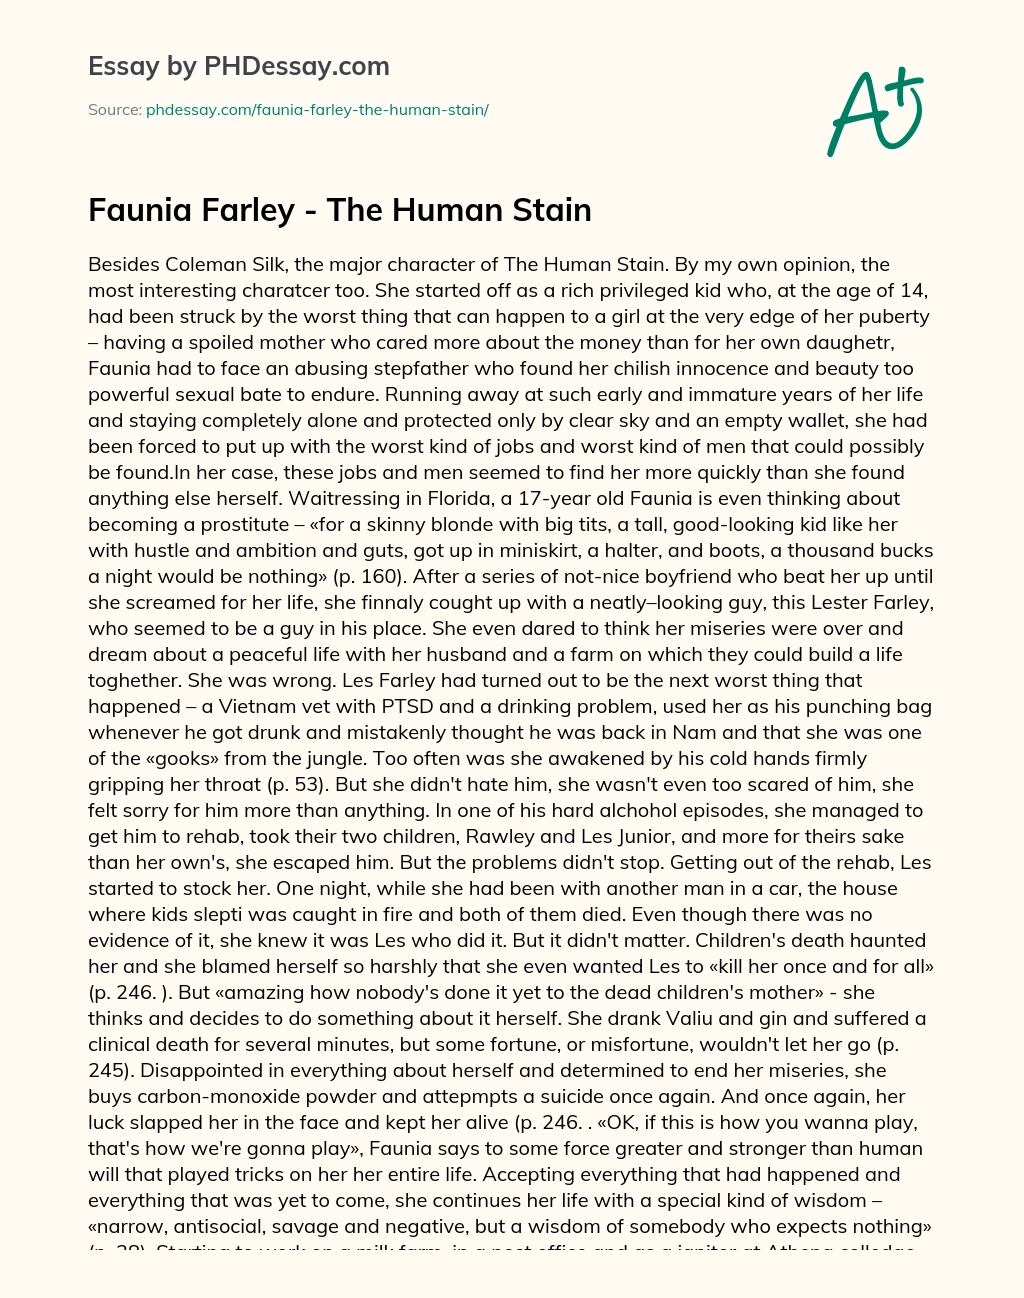 Faunia Farley – The Human Stain essay